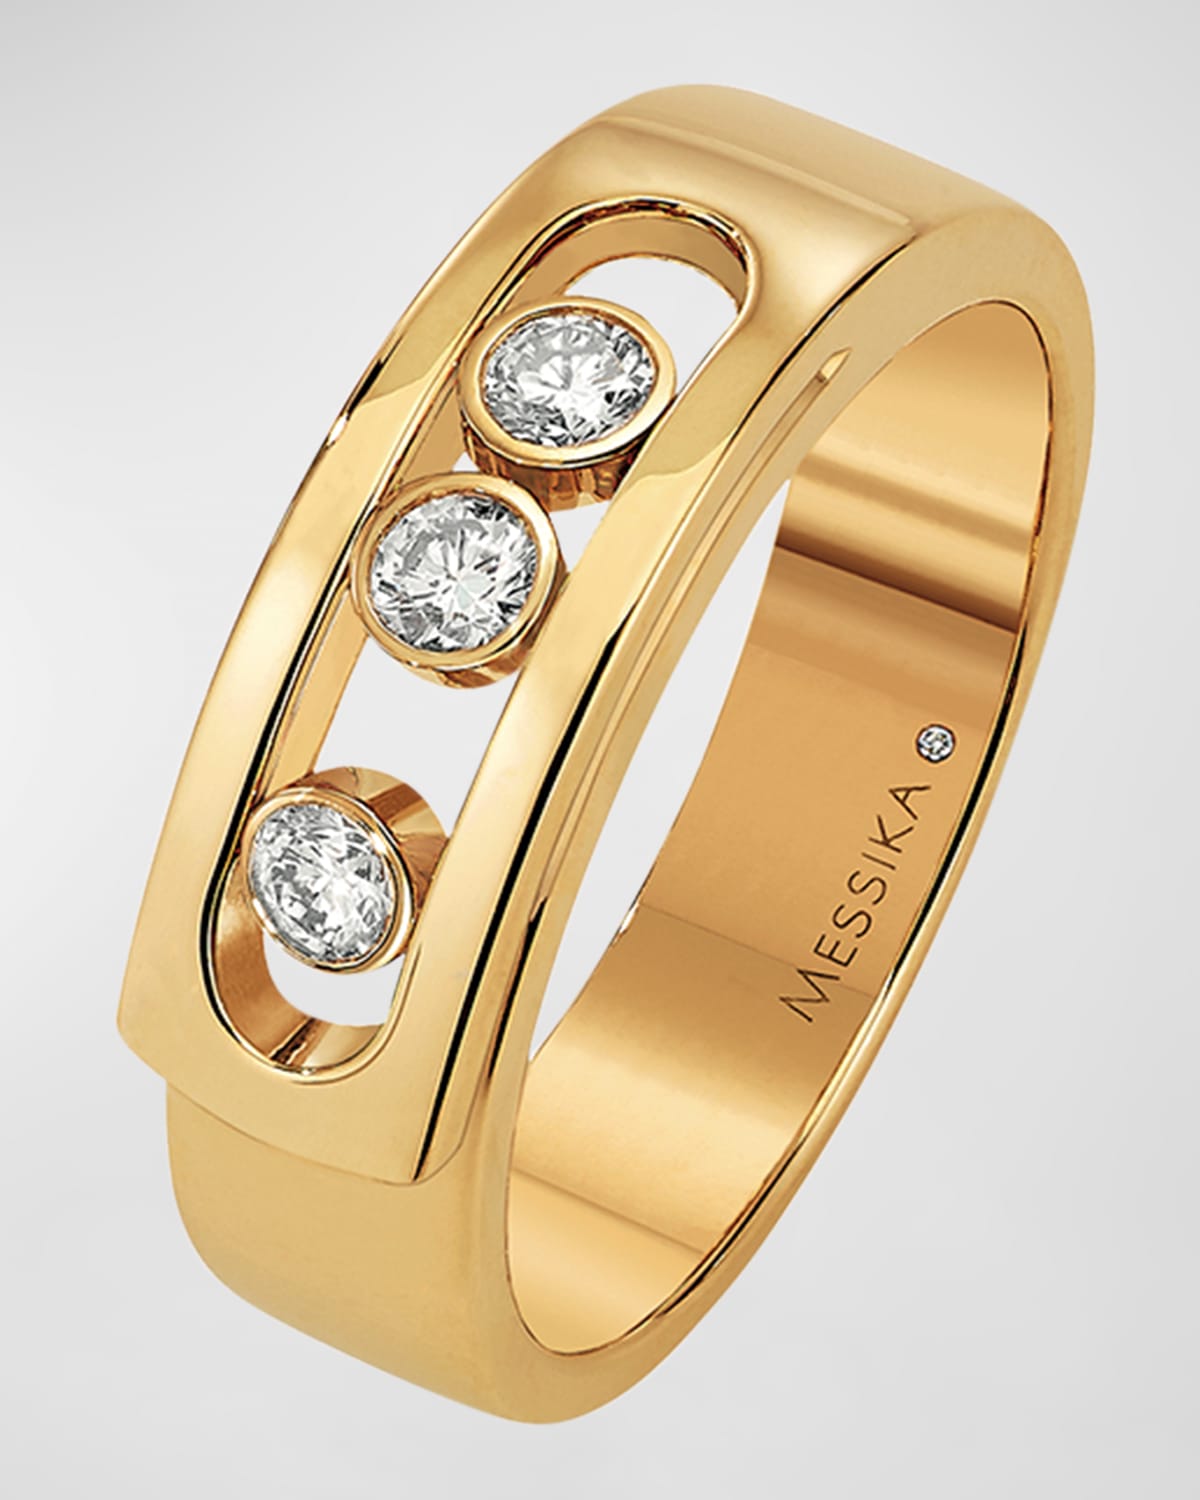 Messika Move 18k Yellow Gold 3-Diamond Ring, Size 53